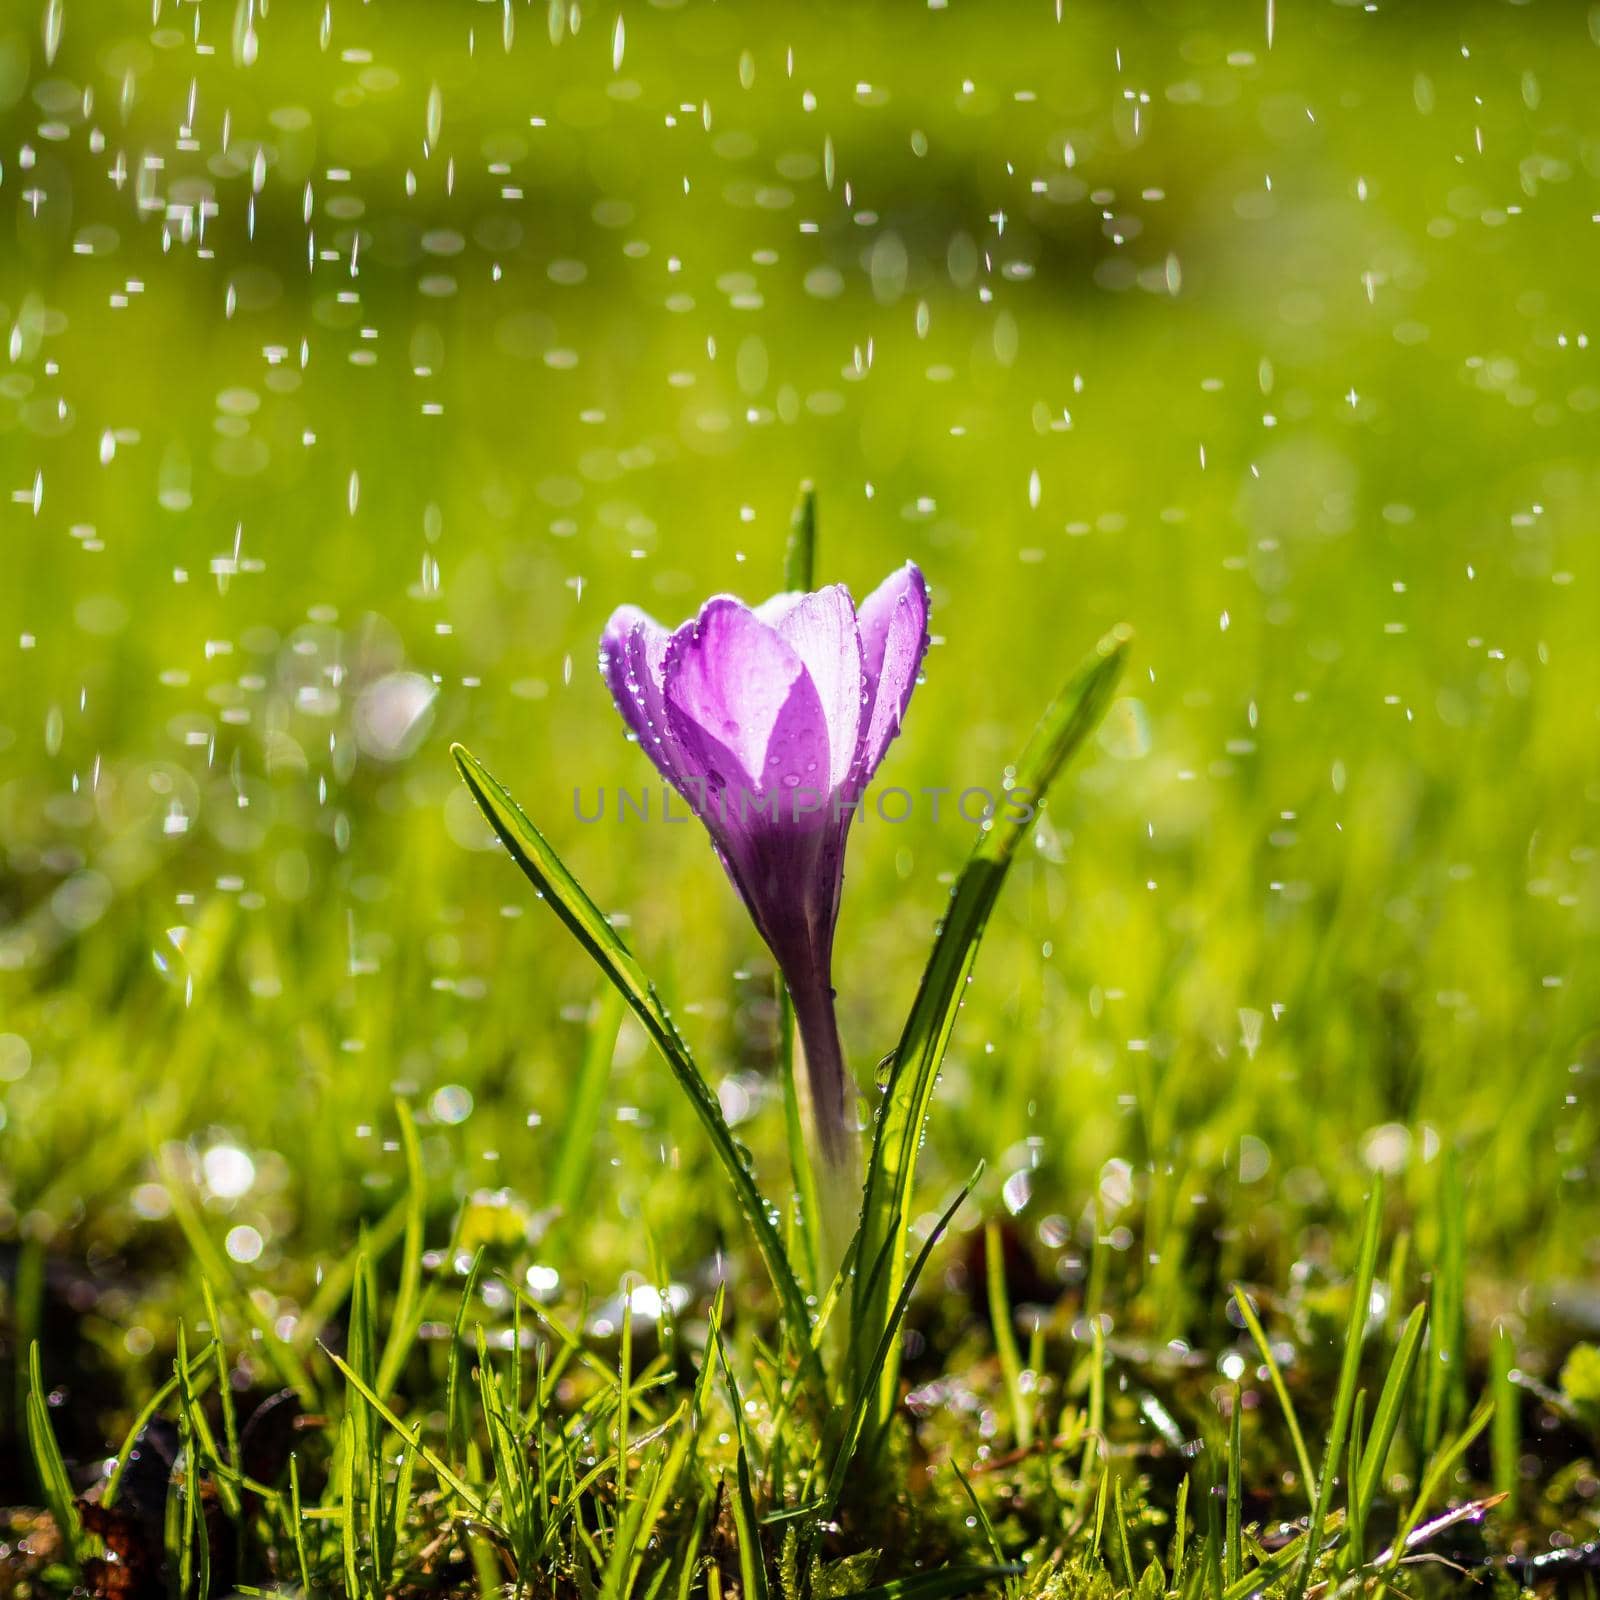 The single purple Crocus flower in drops of light summer rain by NataBene